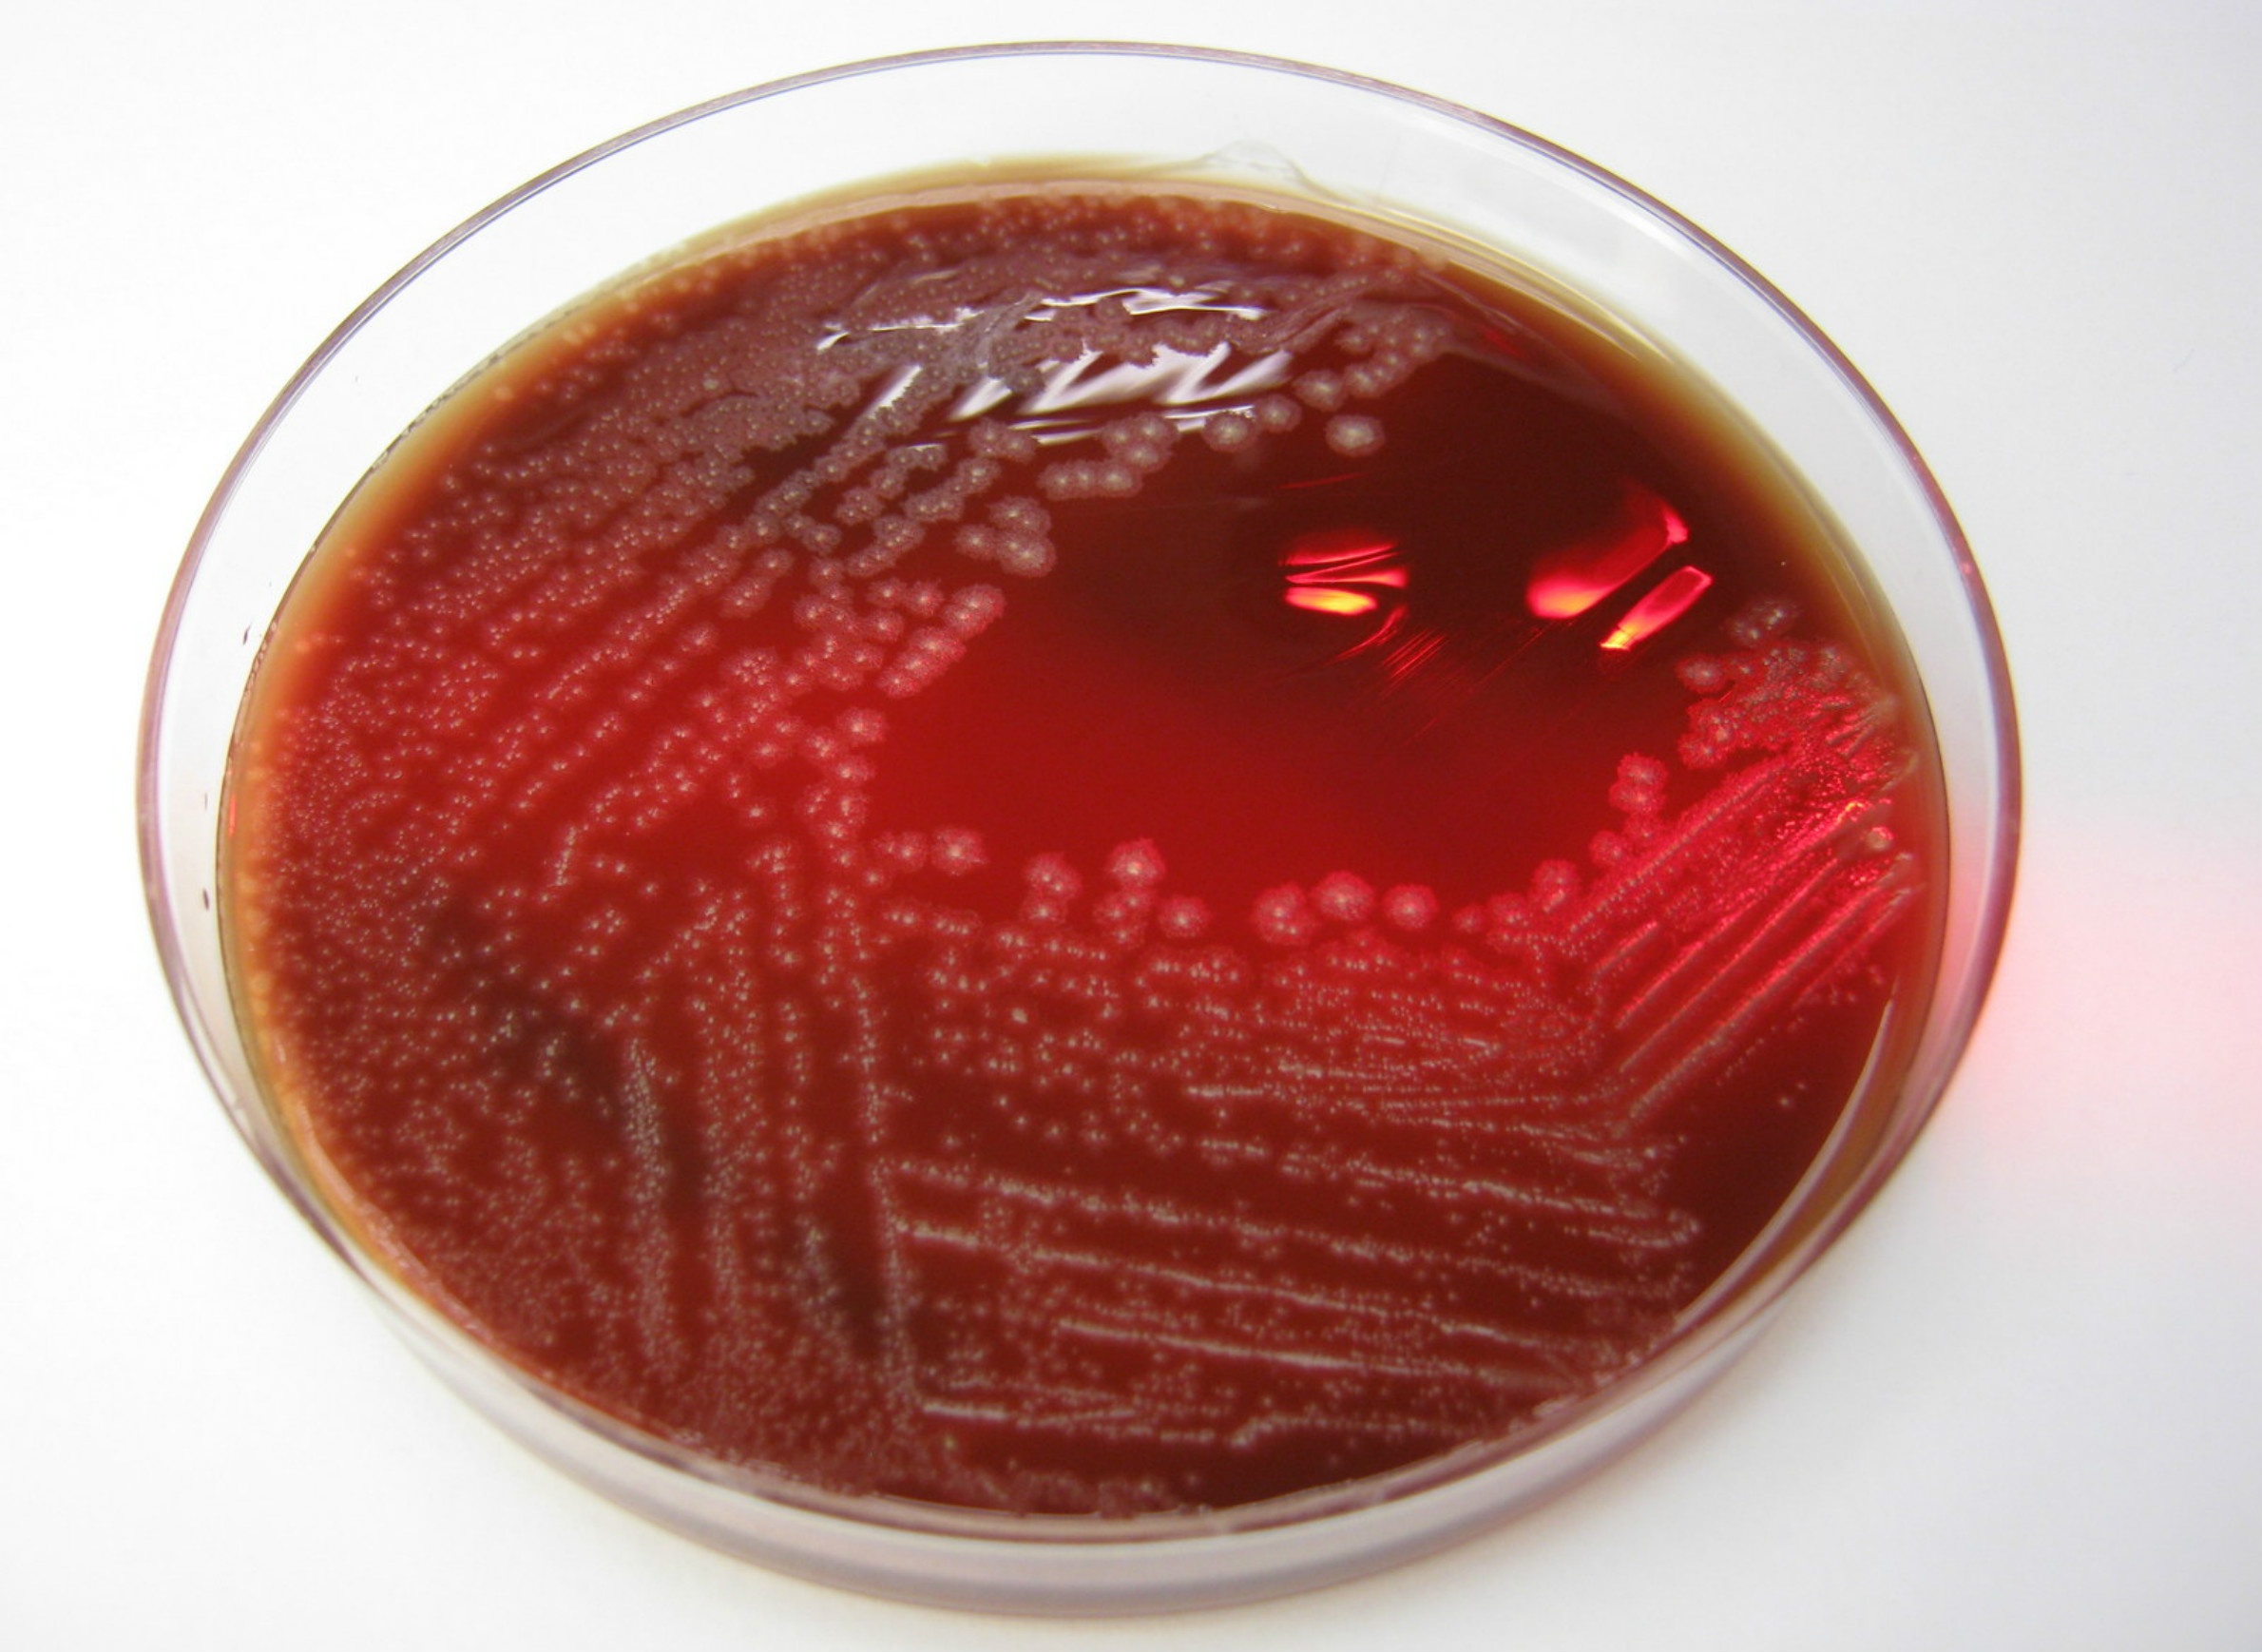 foodsafety-baking-canning-bacteria-culture-clostridiumsporogenes.jpg